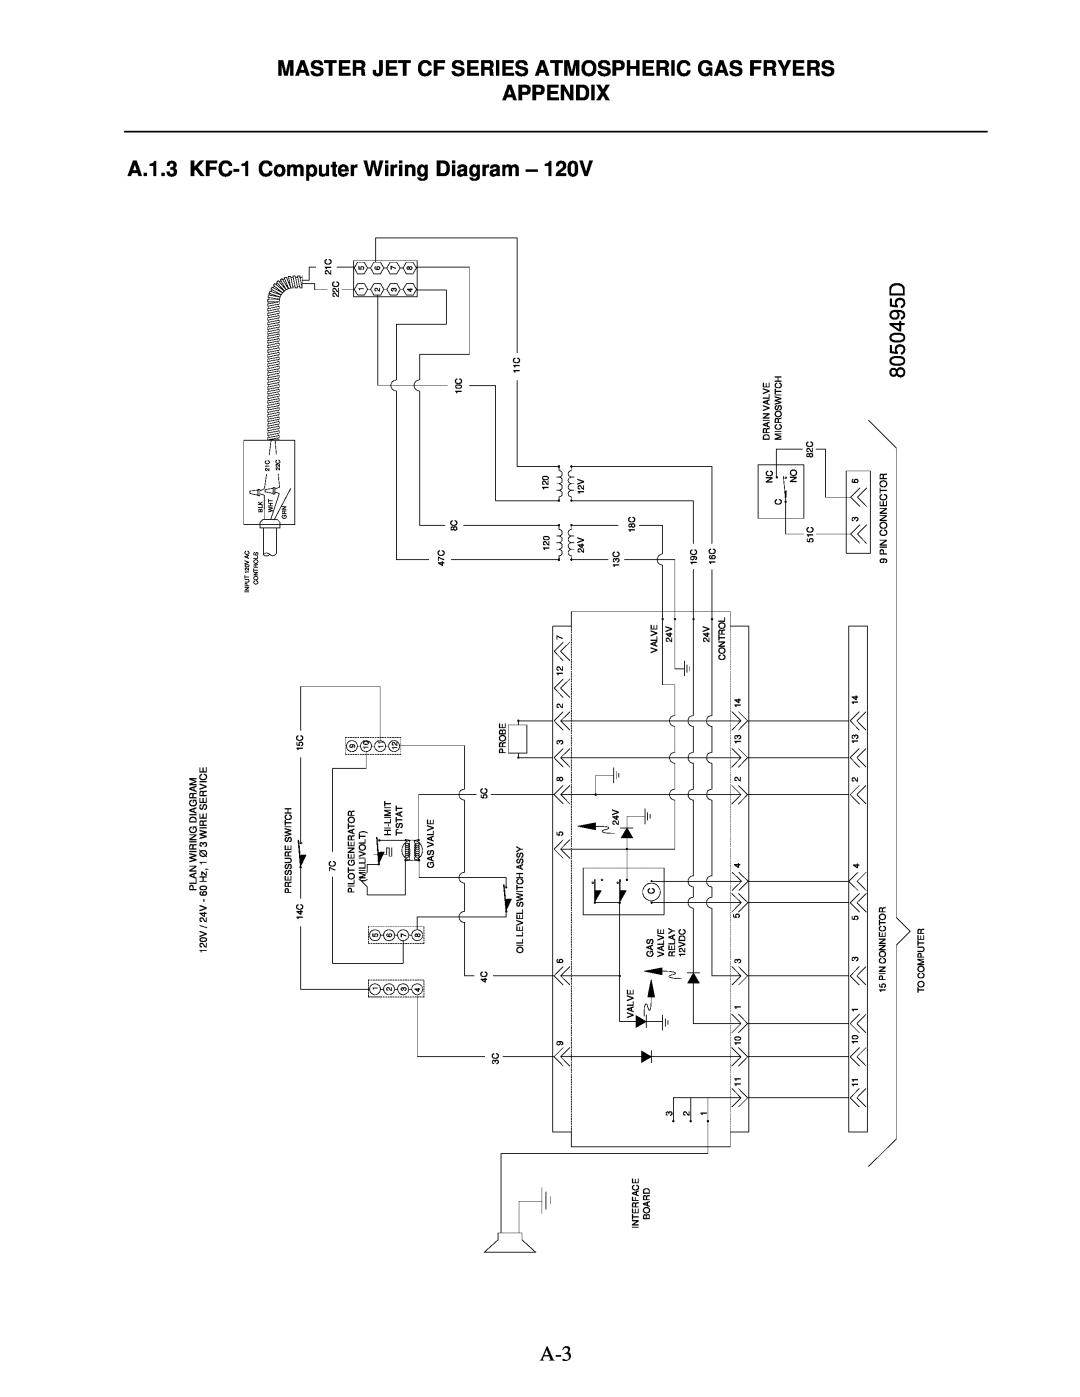 Frymaster J65X, MJCFEC, FMCFEC, KJ3FC, JCFX manual A.1.3 KFC, Computer Wiring, 8050495D, Diagram, Atmospheric Gas Fryers 